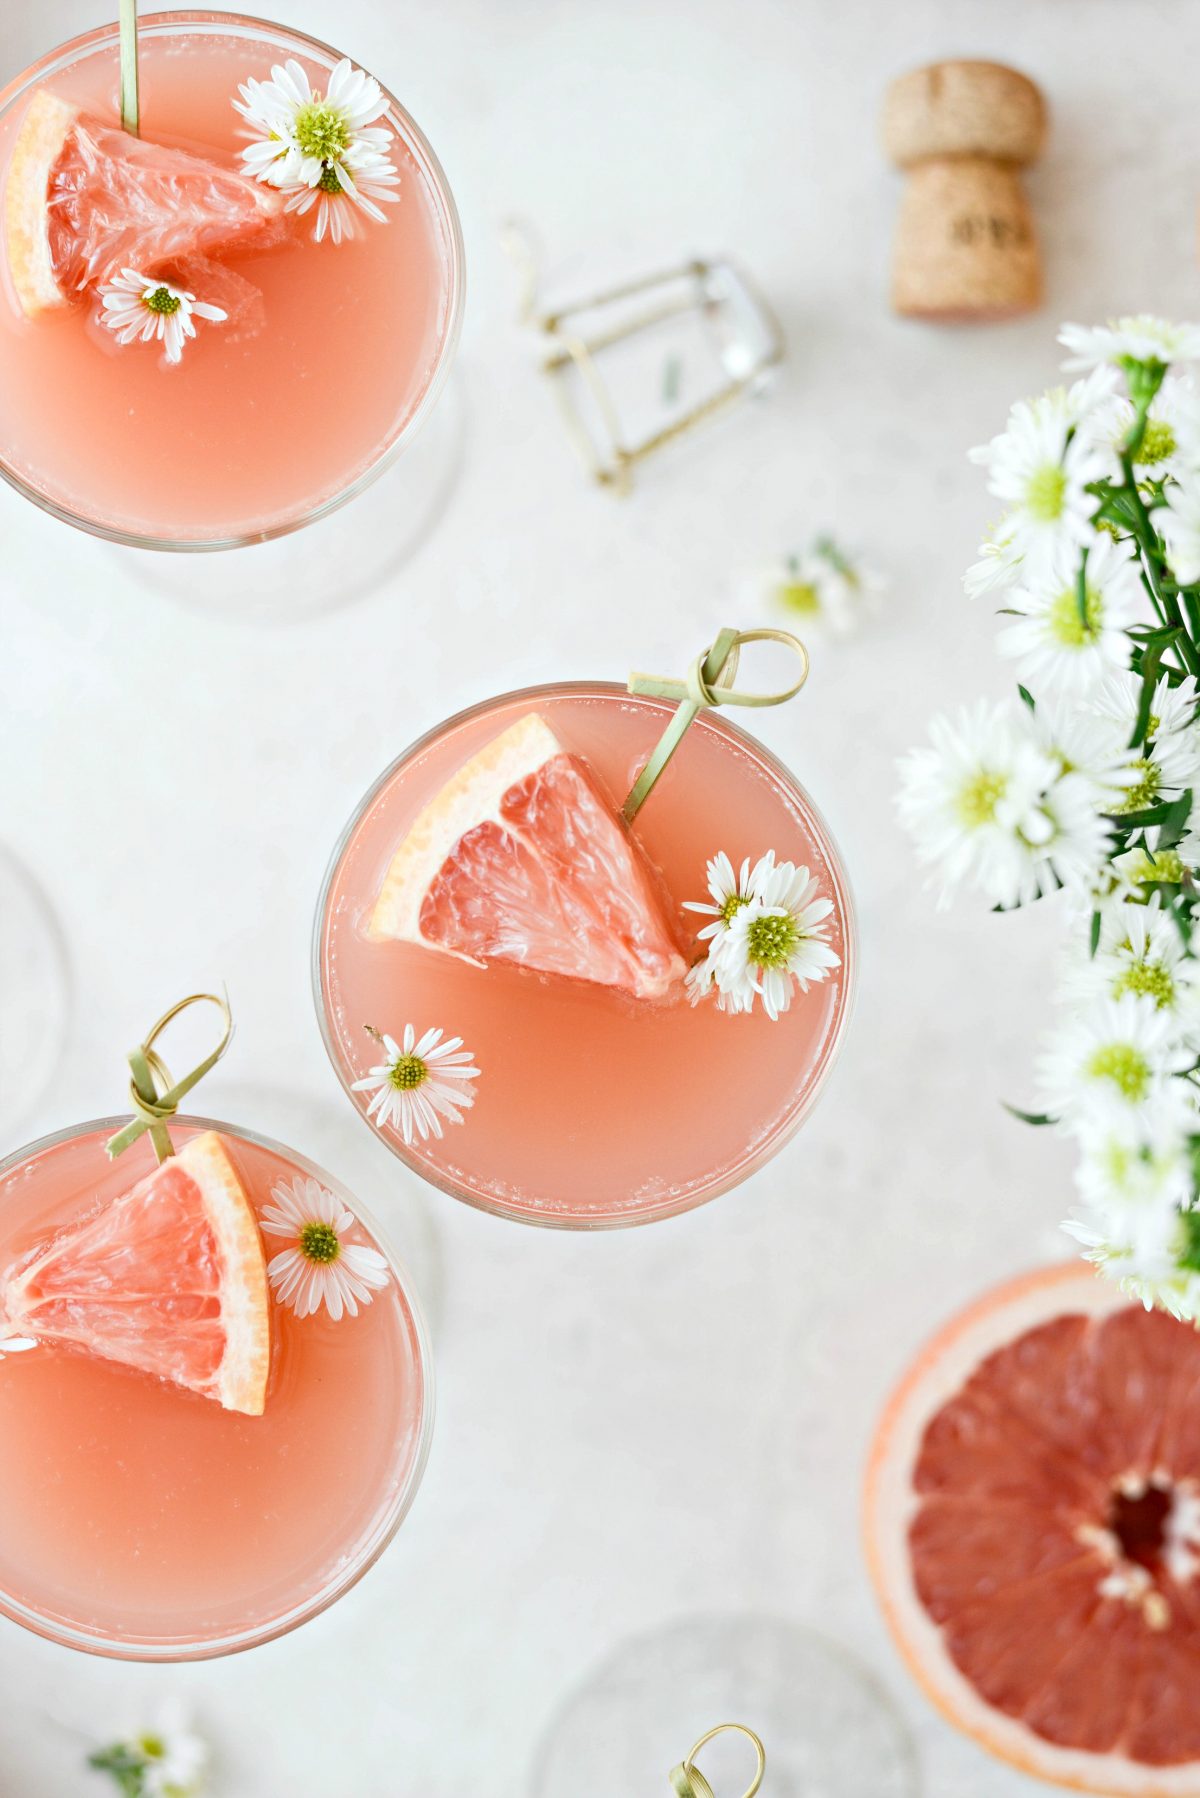 Toranja Rosé Mimosas l SimplyScratch.com #adulta #bebida #toranja #rose #mimosa #páscoa #brunch #mothersday